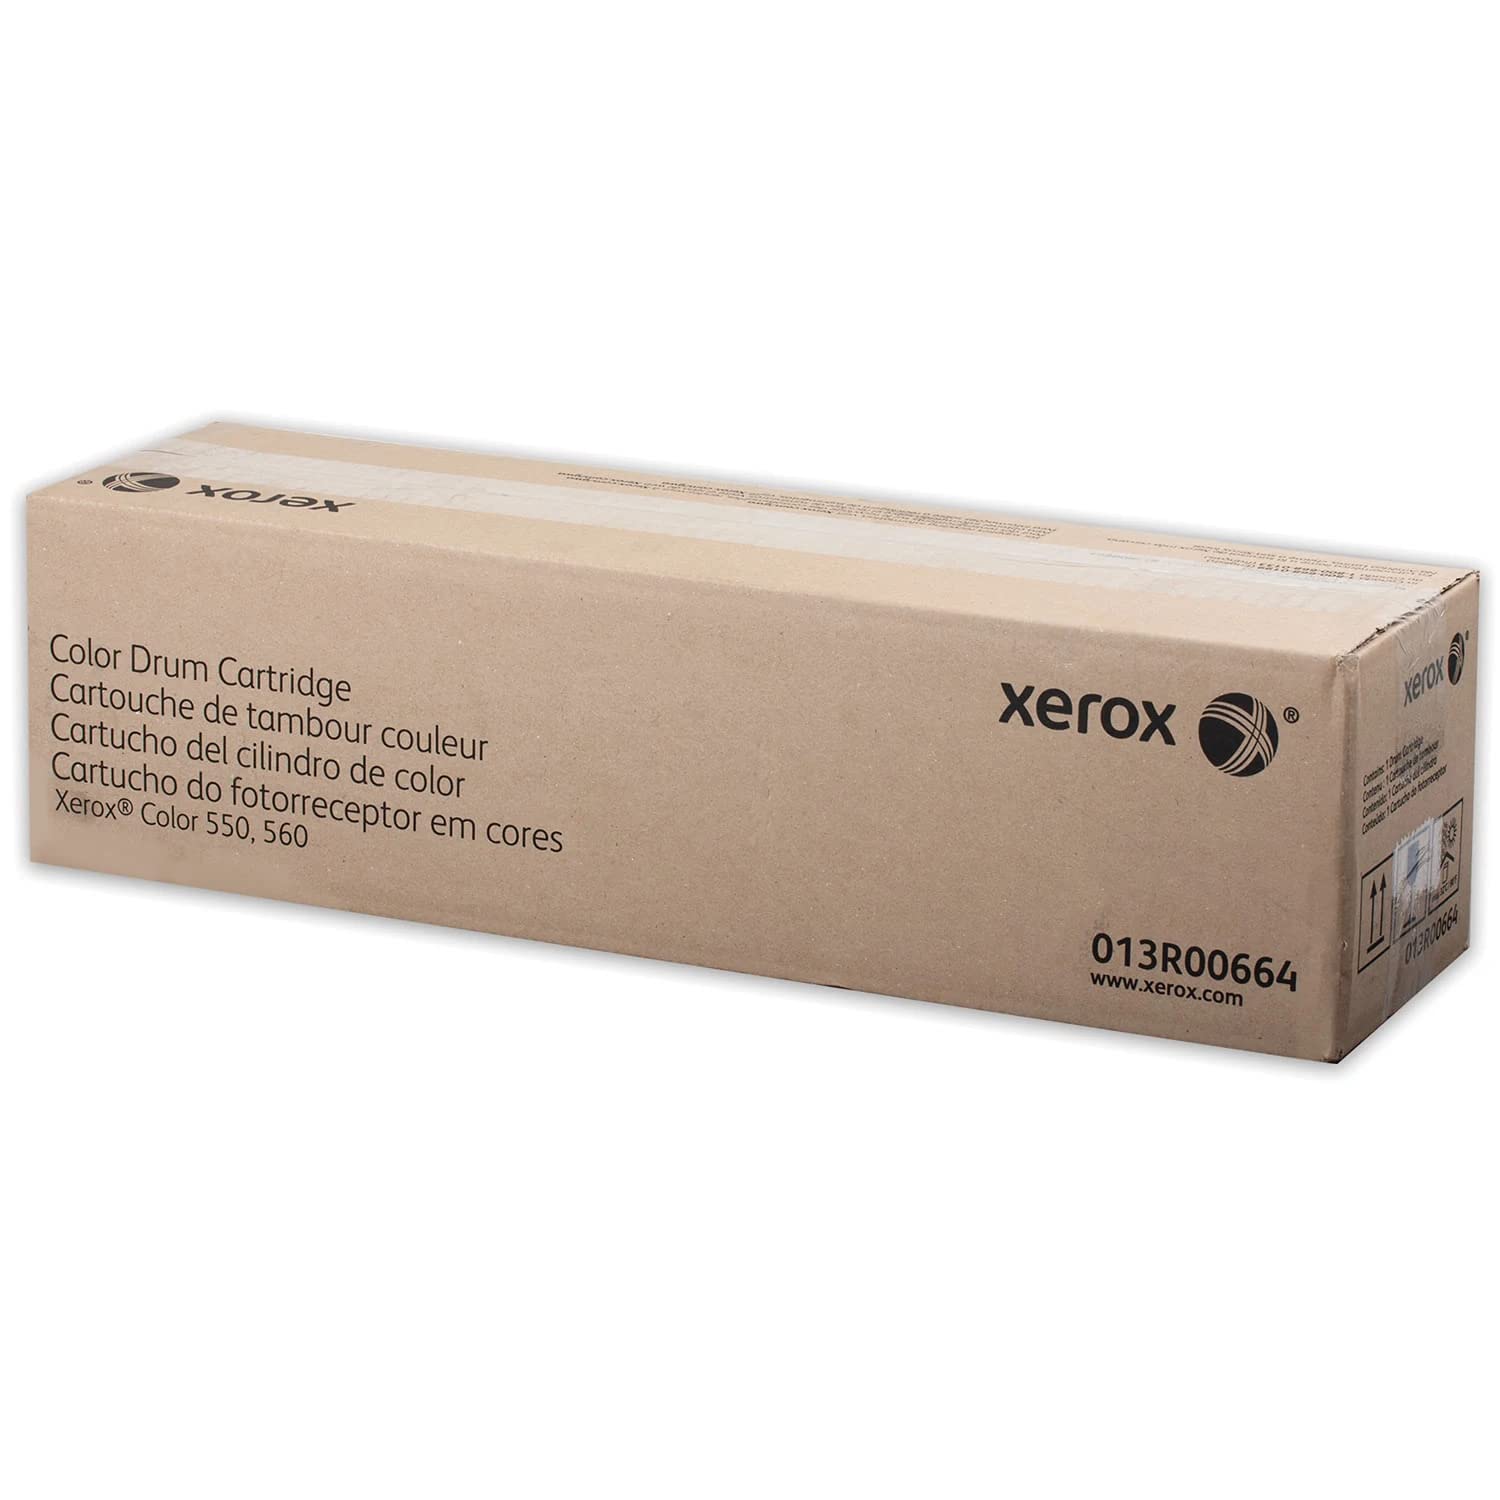 Absolute Toner Xerox 013R00664 Genuine OEM Color 500 Series Cru Color (Color Drum Cartridge) Original Xerox Cartridges